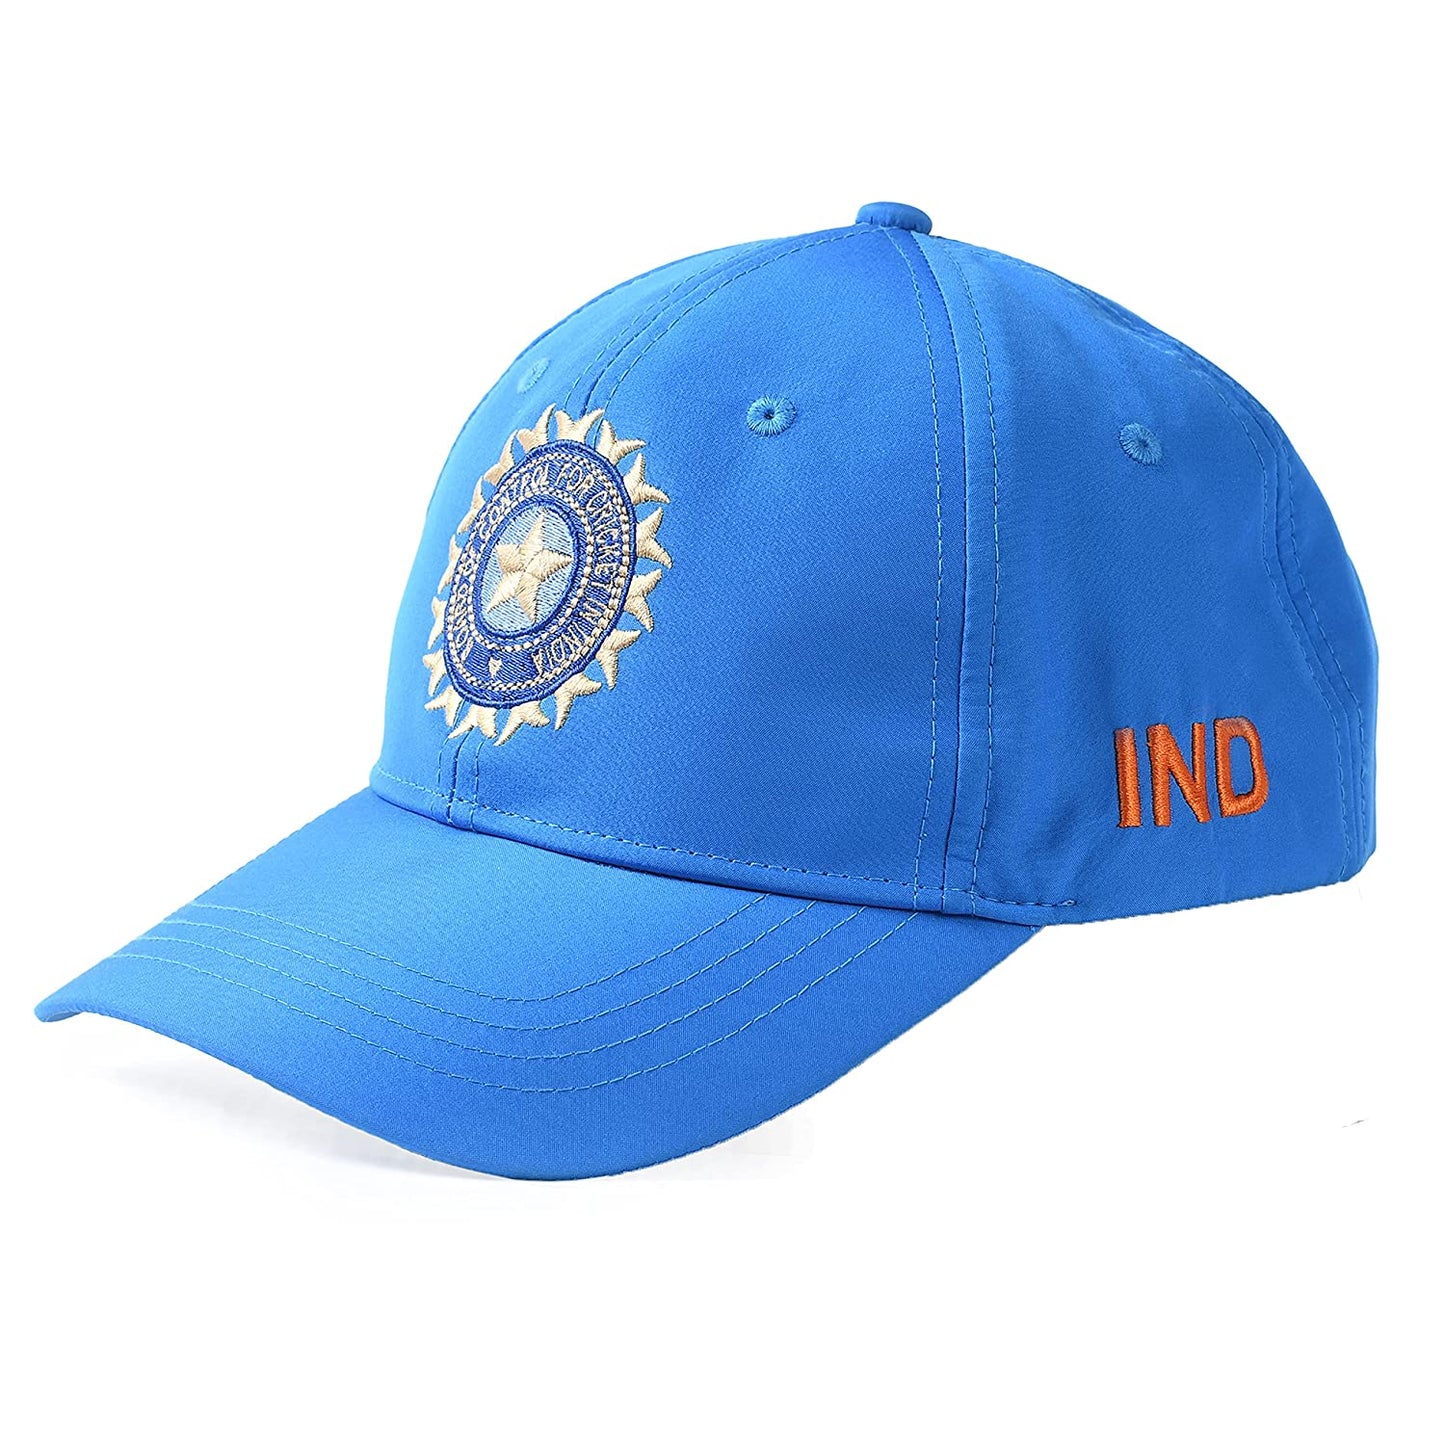 Playr T20 Cap, India Blue - Best Price online Prokicksports.com